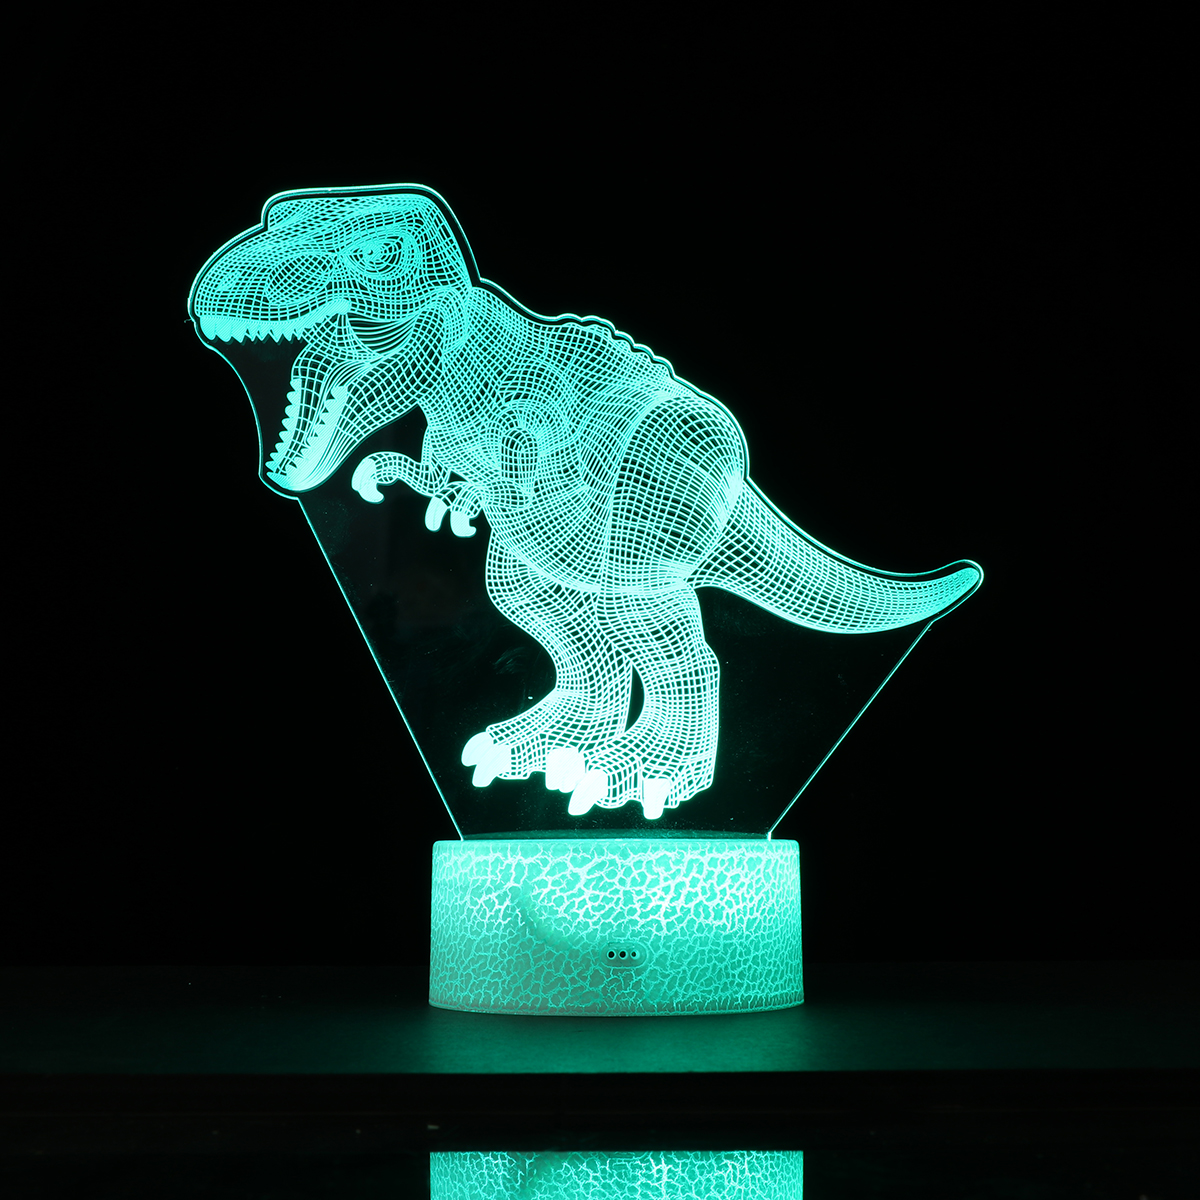 USBBattery-Powered-3D-Children-Kids-Night-Light-Lamp-Dinosaur-Toys-Boys-16-Colors-Changing-LED-Remot-1772096-6